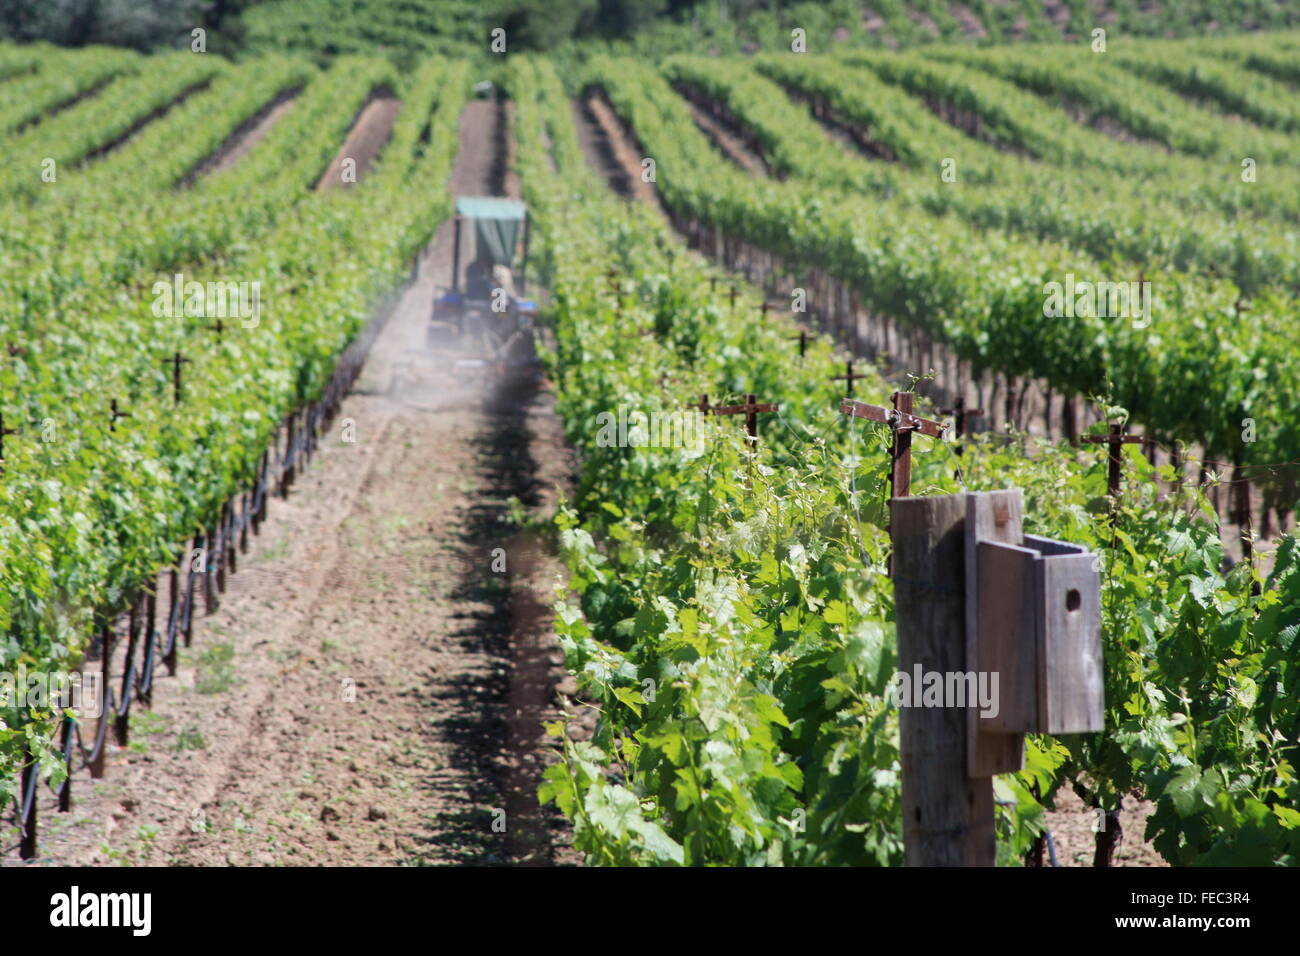 Tractor in vineyard, northern Califormnia, USA Stock Photo